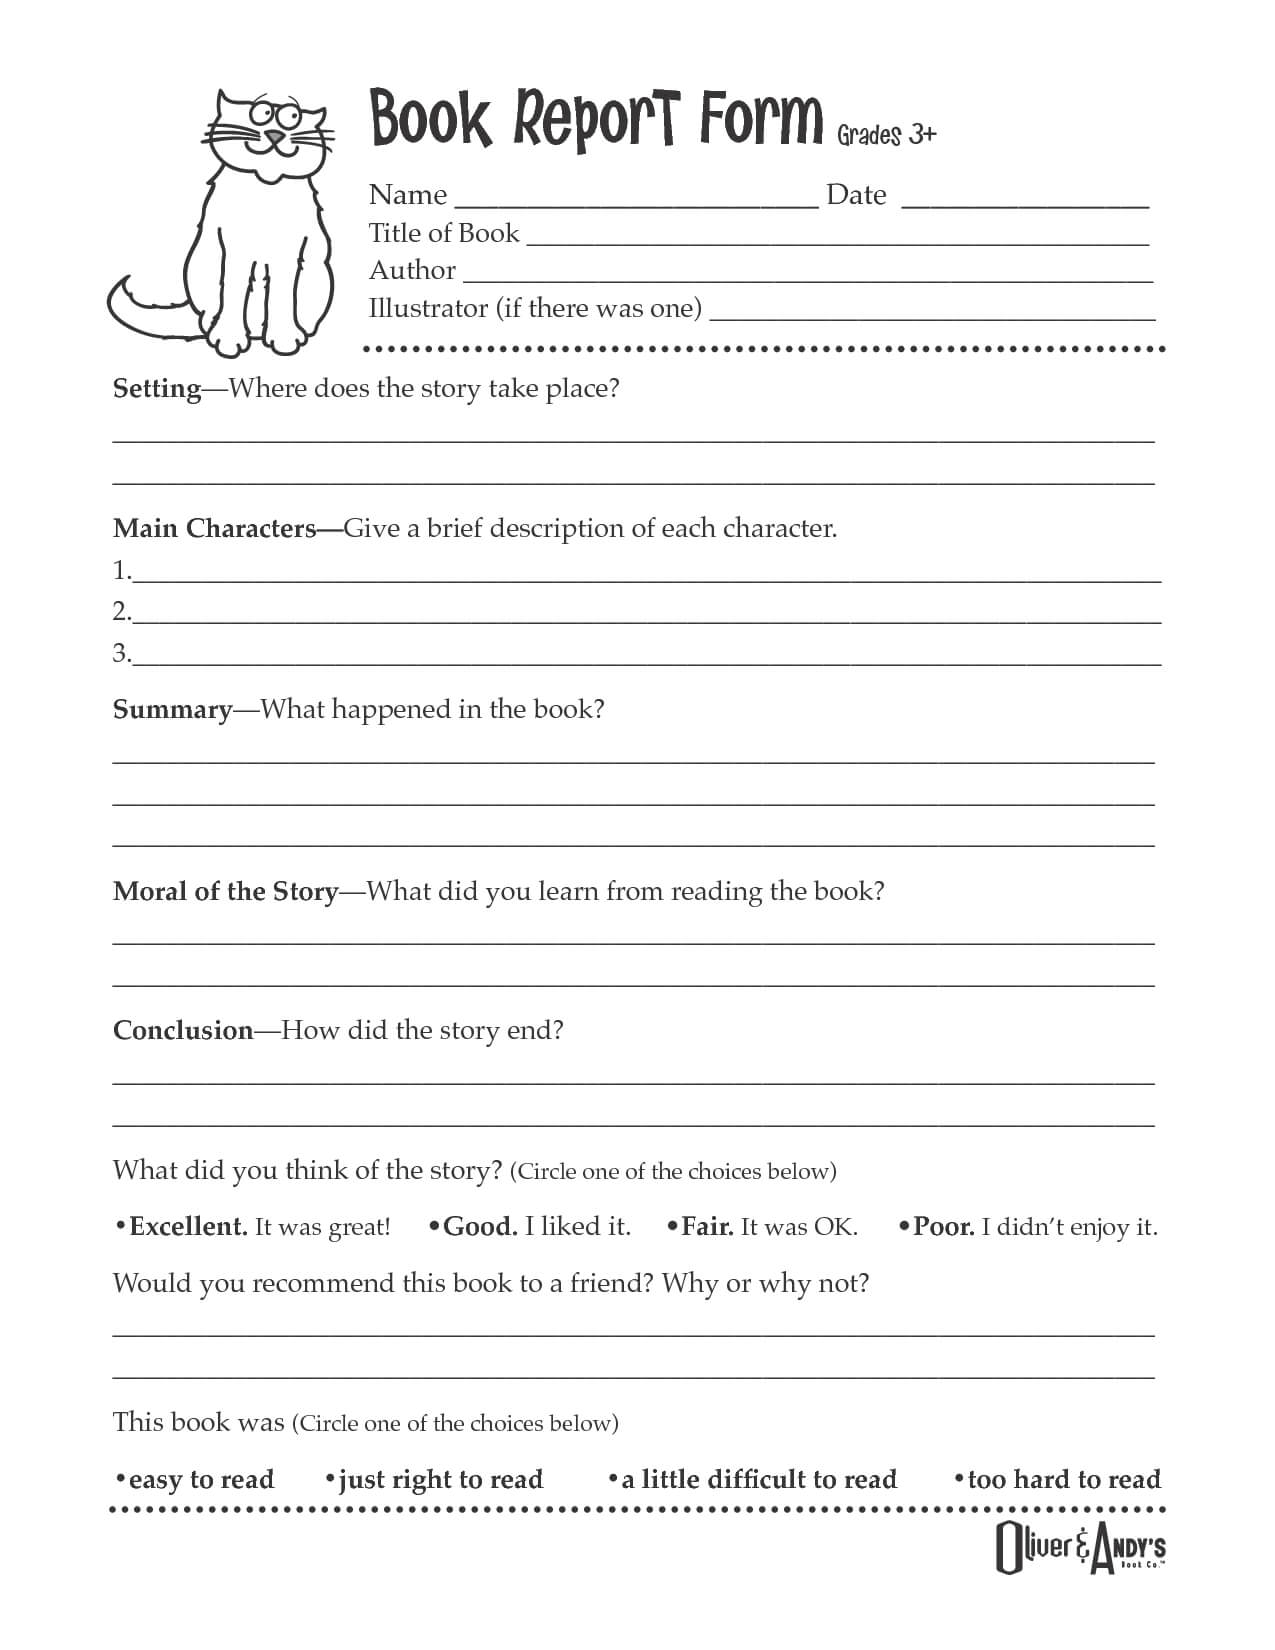 Second Grade Book Report Template | Book Report Form Grades Throughout Book Report Template 3Rd Grade